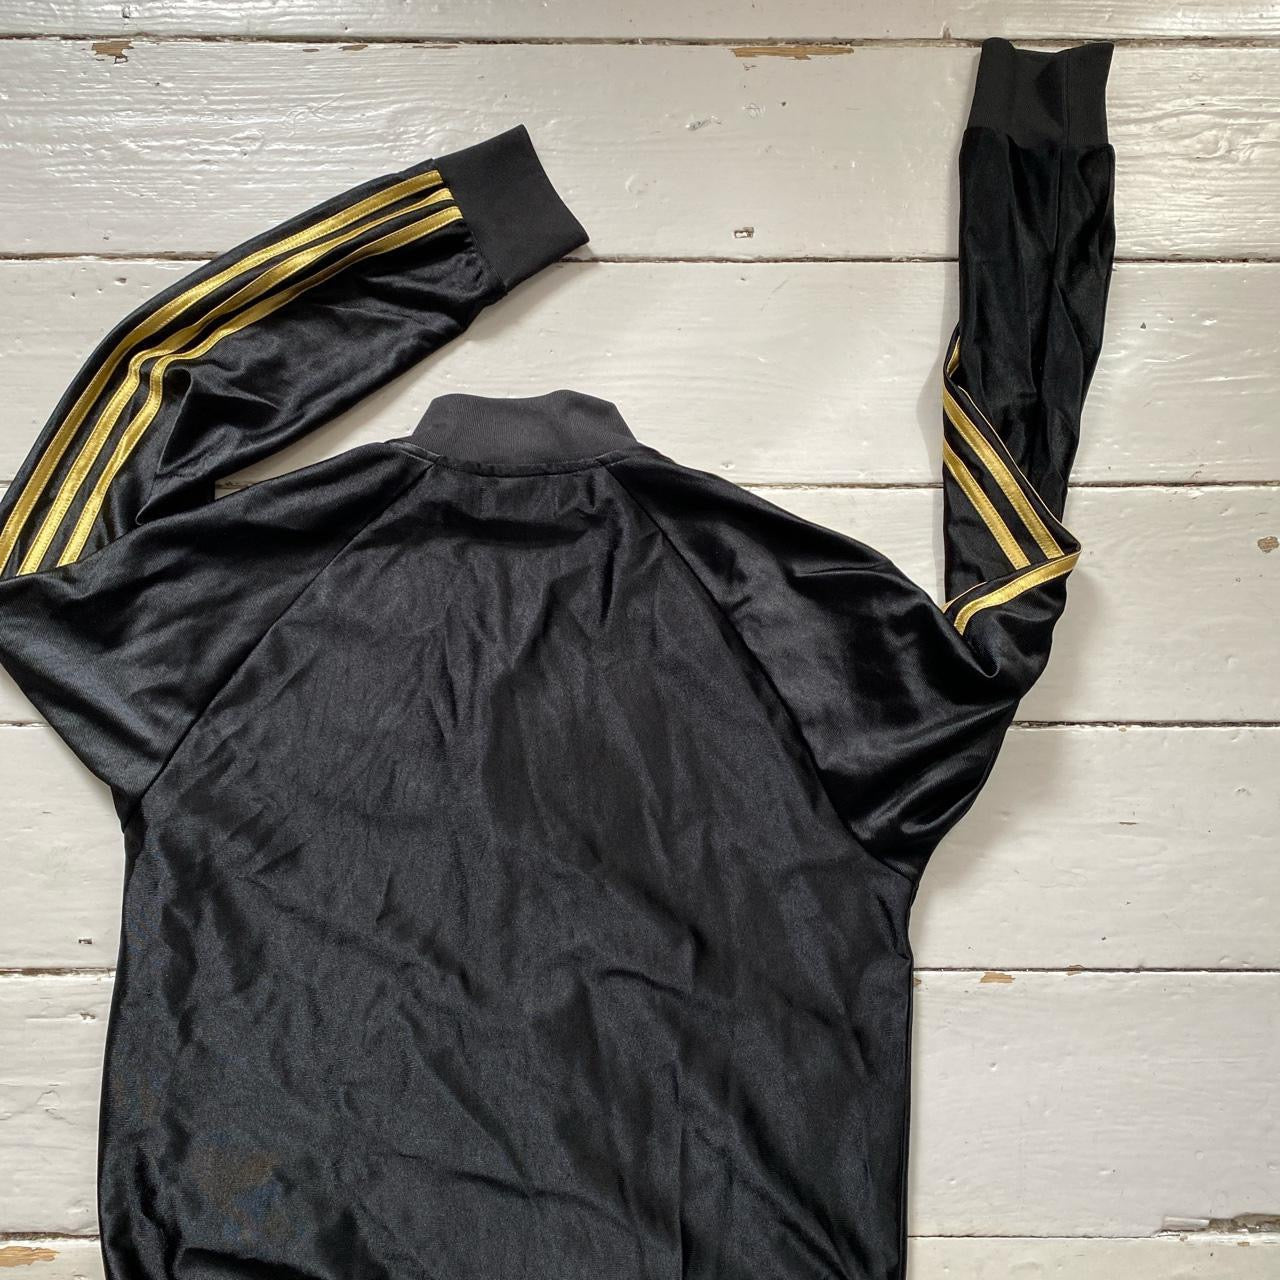 Adidas Black and Gold Top (Medium)